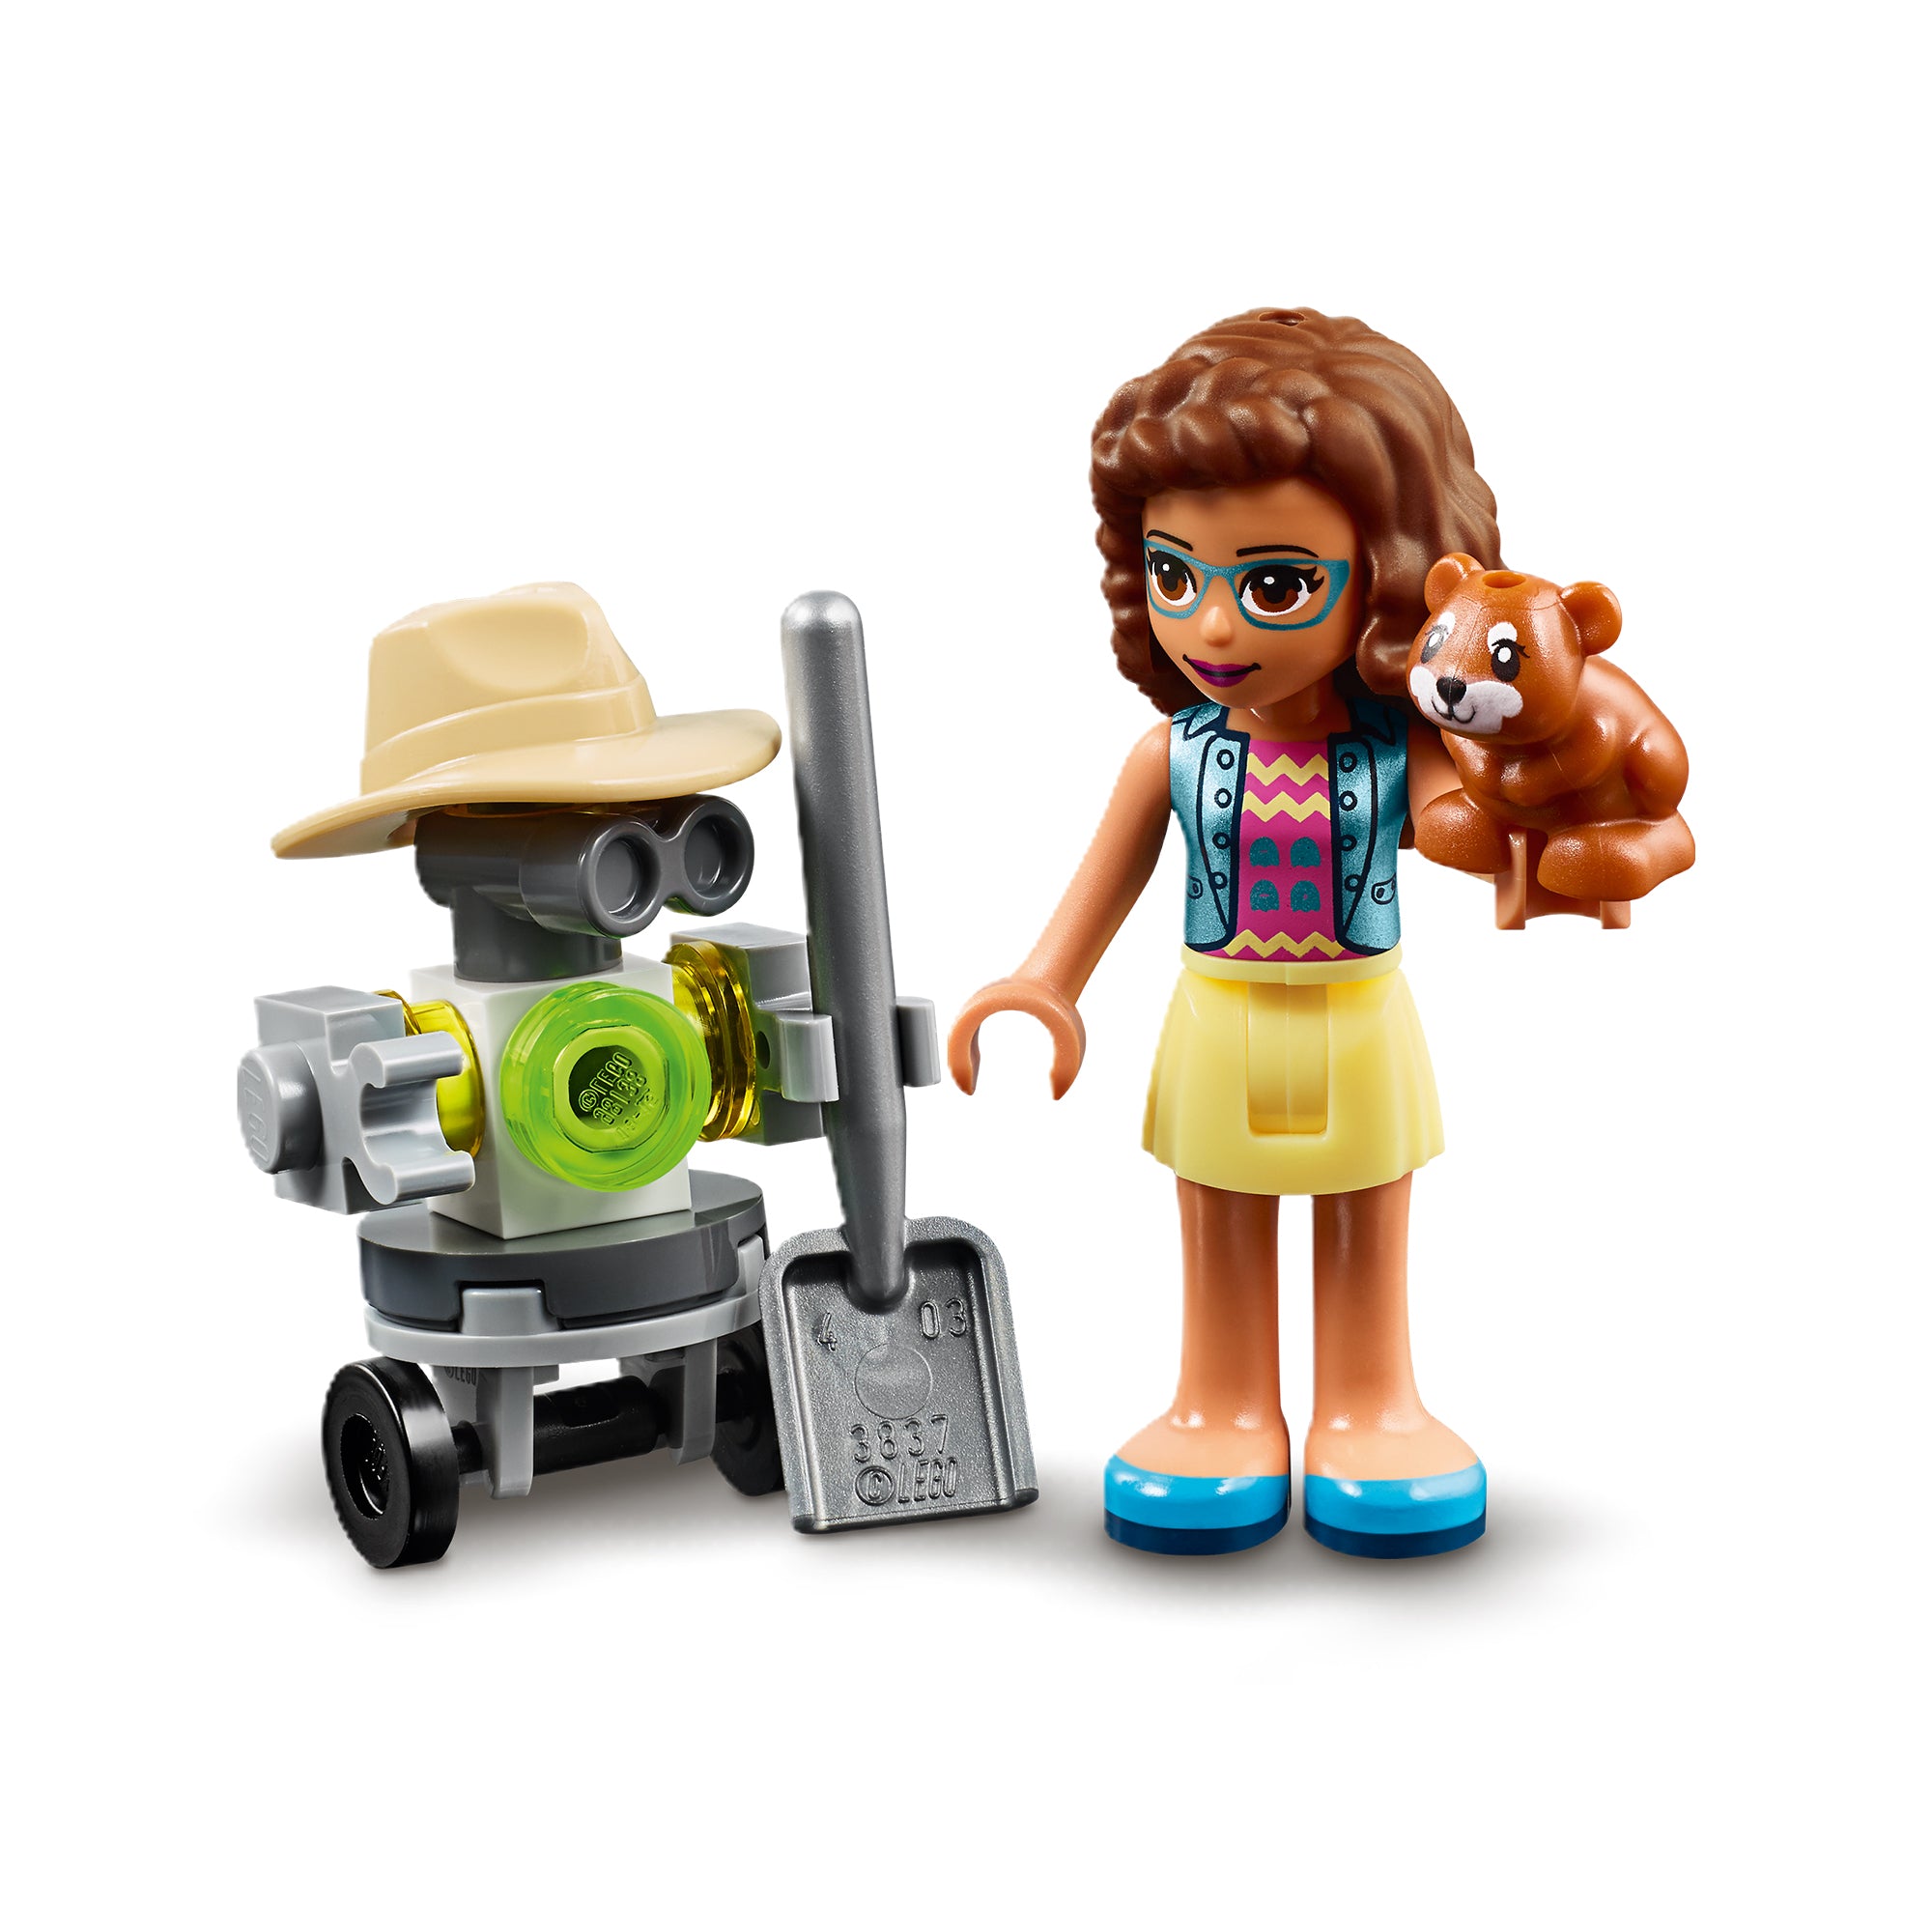 LEGO® Friends Olivia's Flower Garden Play Set 41425 Default Title